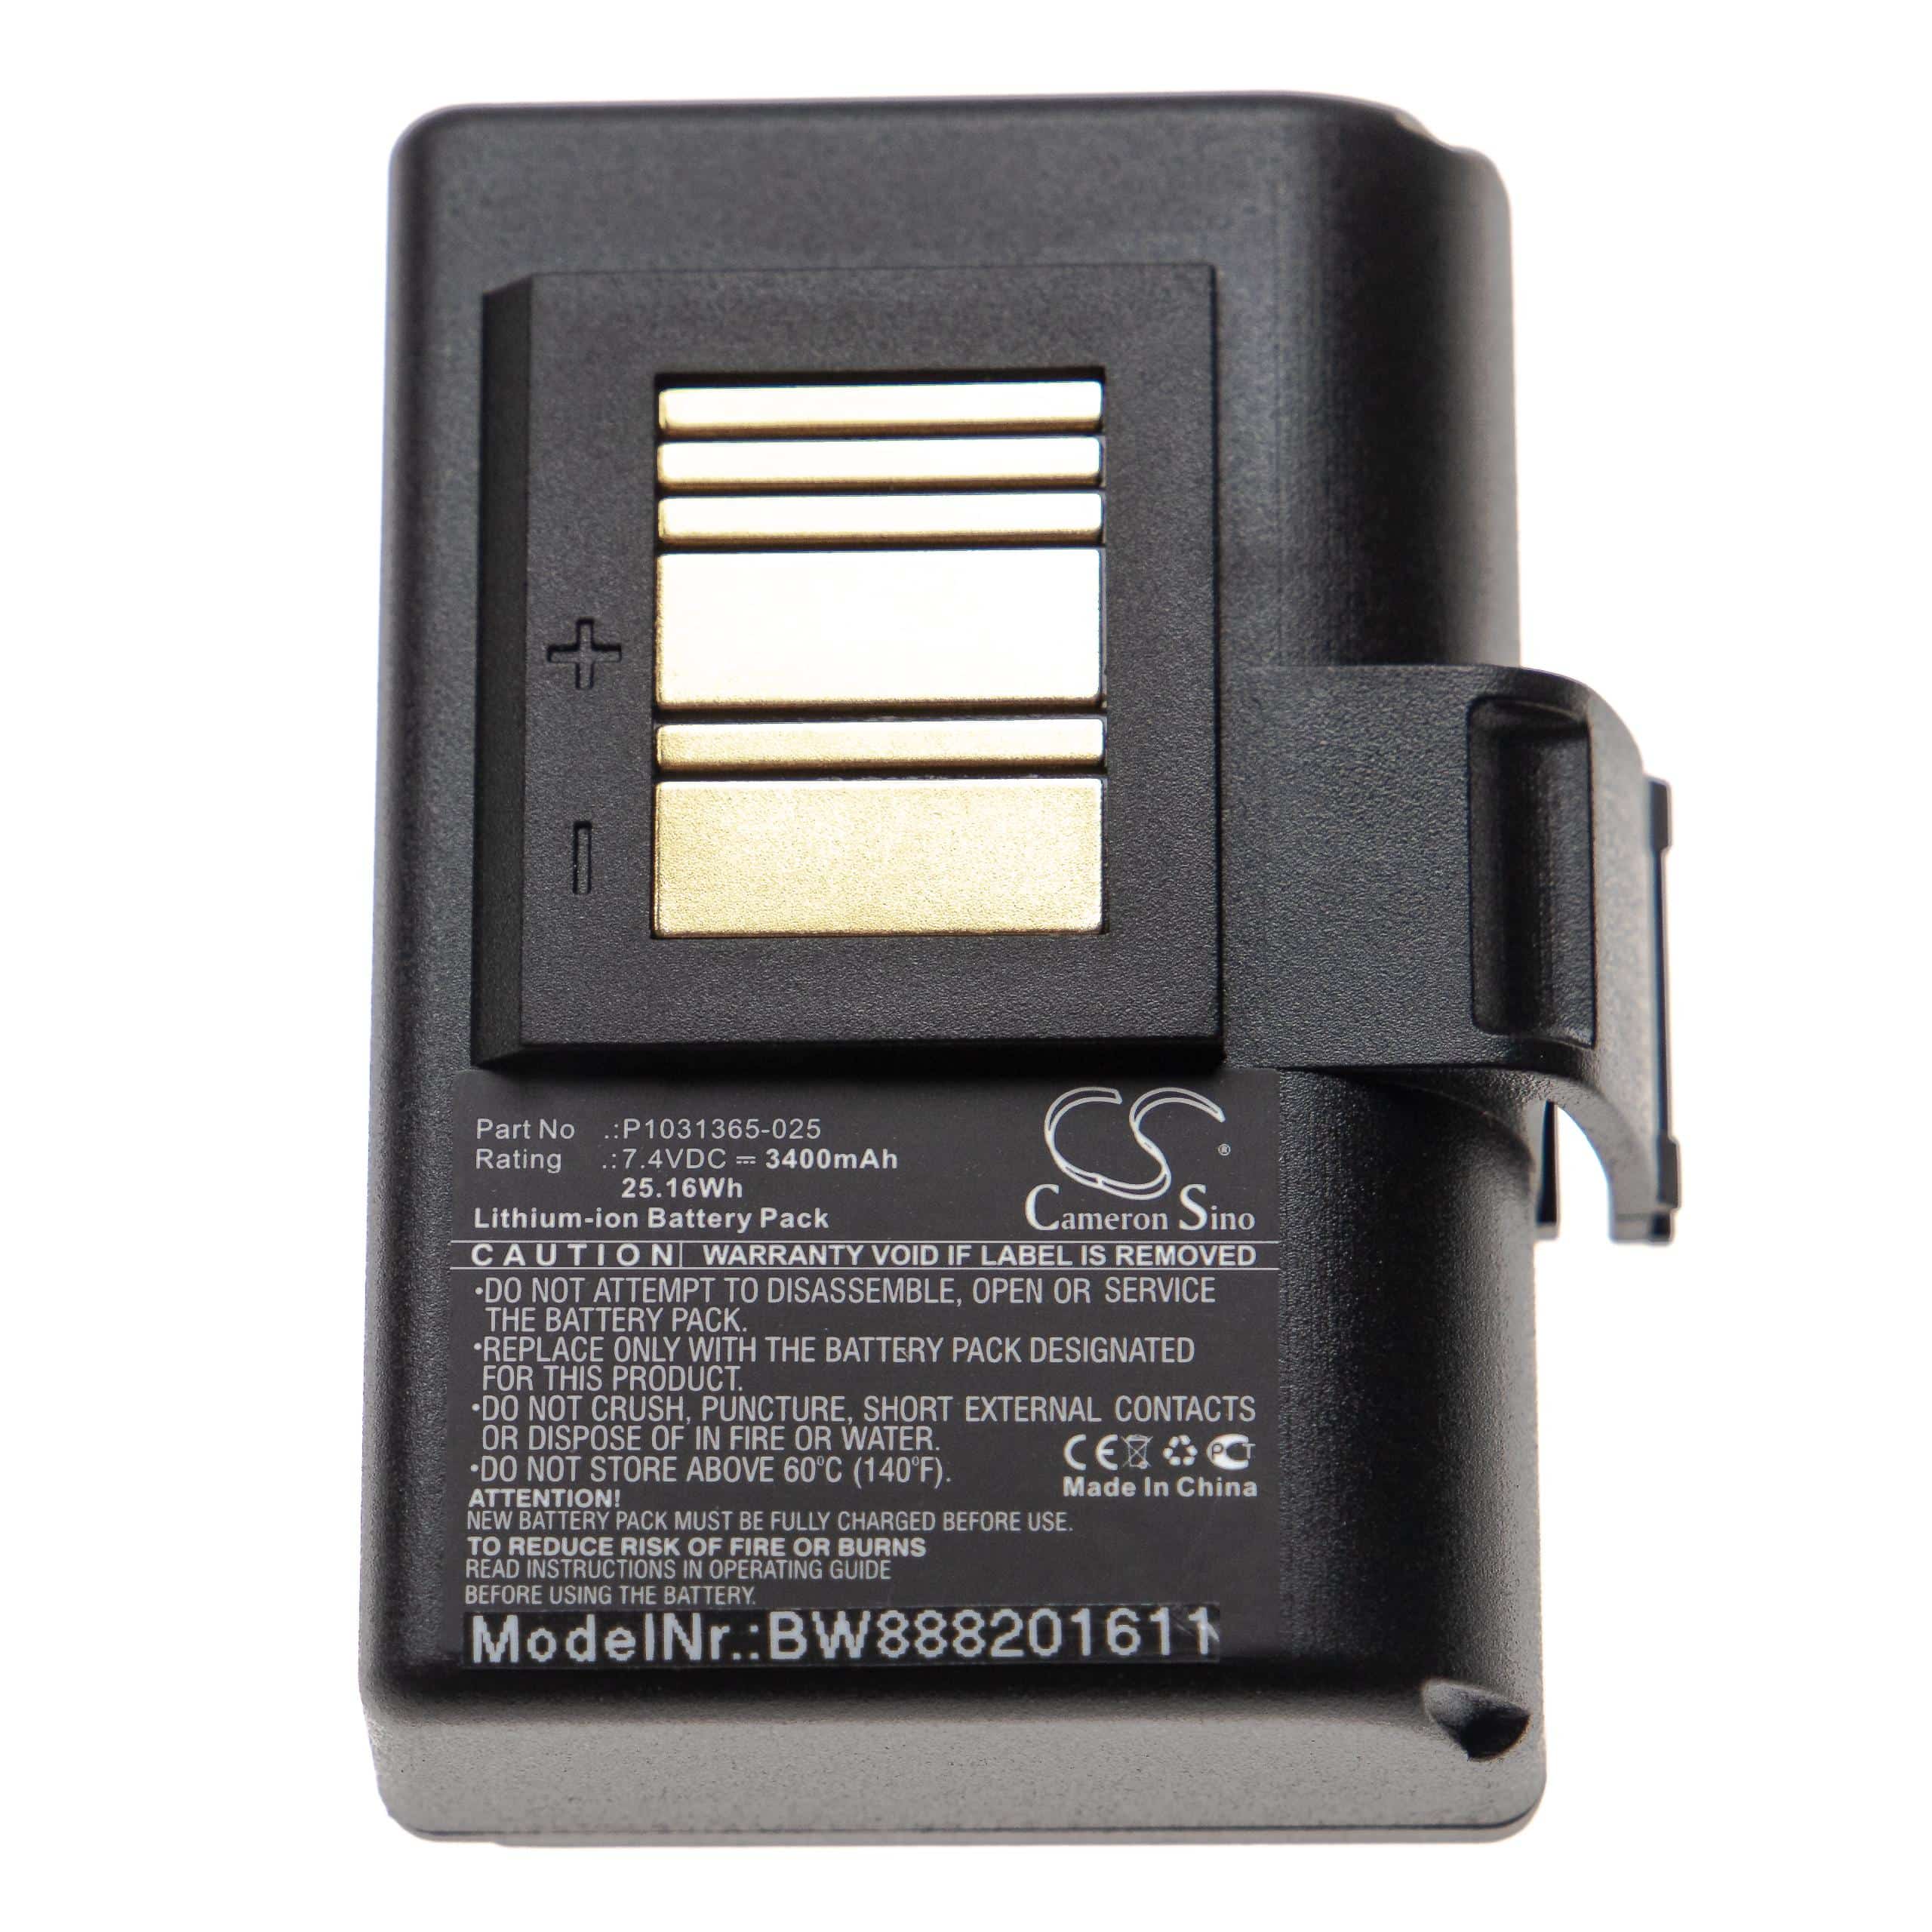 Batterie remplace Zebra AT16004, BTRY-MPP-34MA1-01, BTRY-MPP-34MAHC1-01 pour imprimante - 3400mAh 7,4V Li-ion